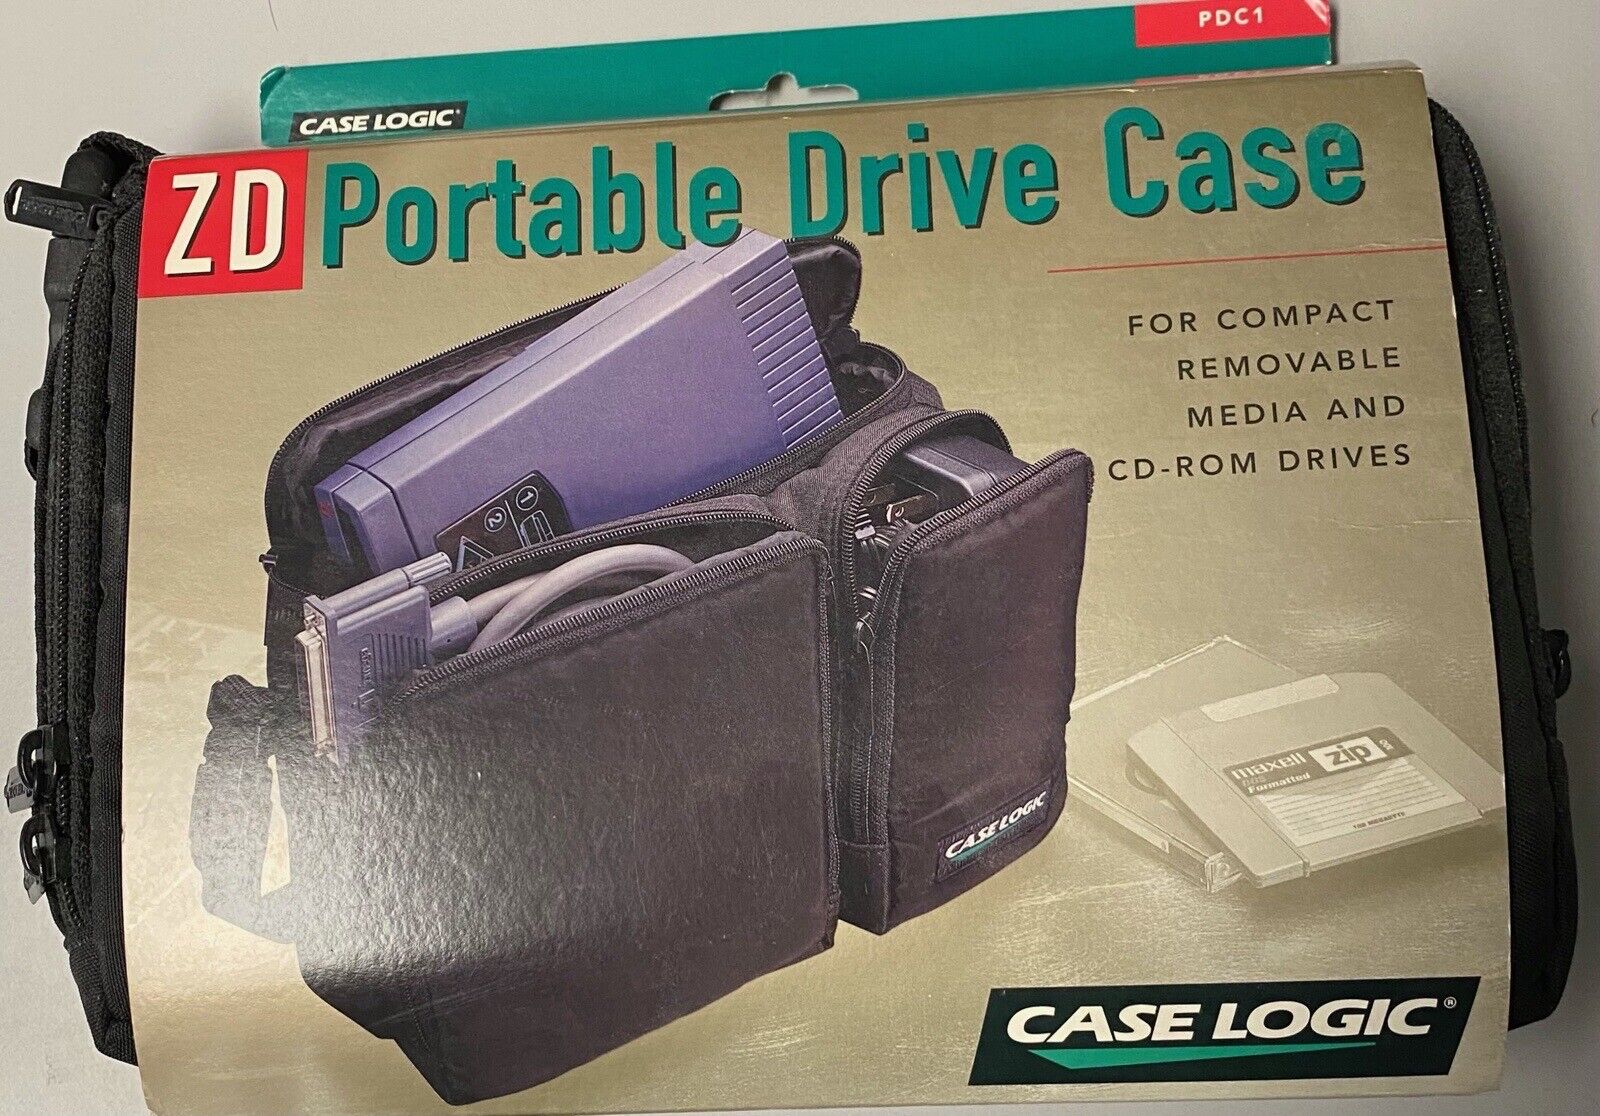 Case Logic ZD Portable Drive Case PDC1 Hard Drive - Black for CD-ROM drive Media